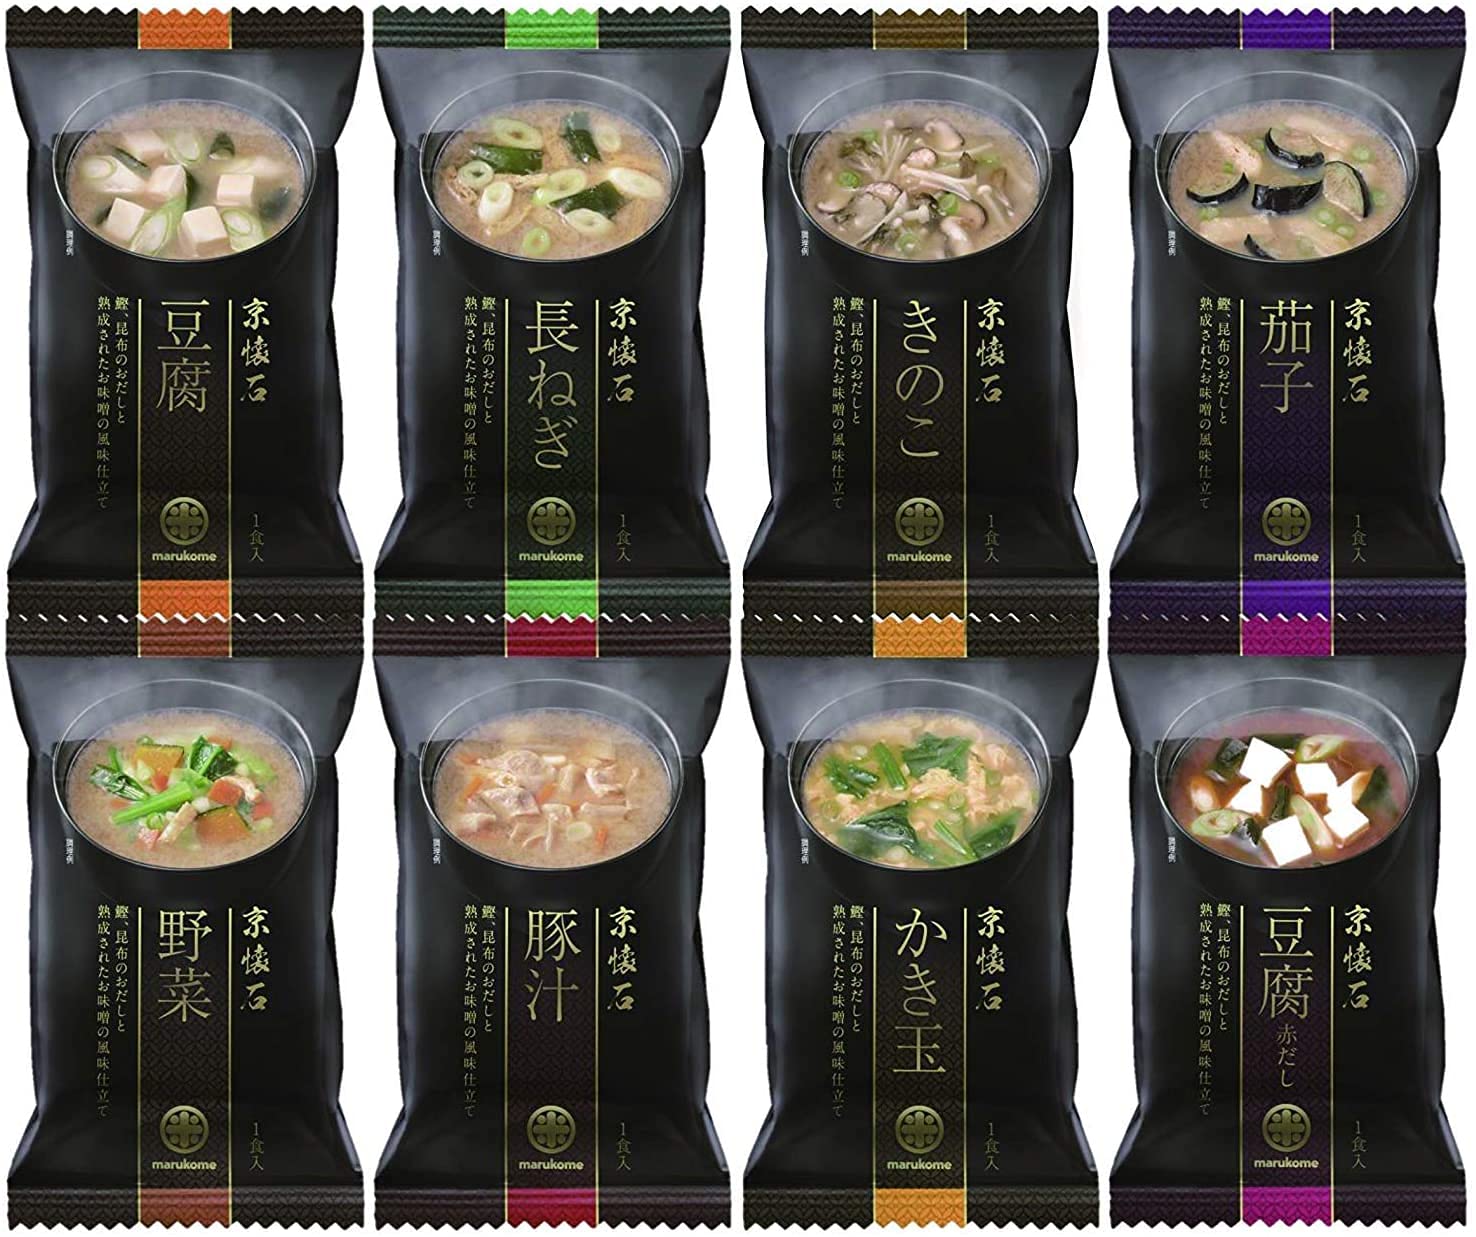 Soup　trên　Dried　Ingredients　[Marukome]　Fado　Kaiseki　Freeze　hãng　Mua　Assortment　Servings),　Miso　Includes　with　Meals　(8　16　chính　Types,　Each,　Box,　Soup　Nhật　Amazon　2023　Miso　Kyoto